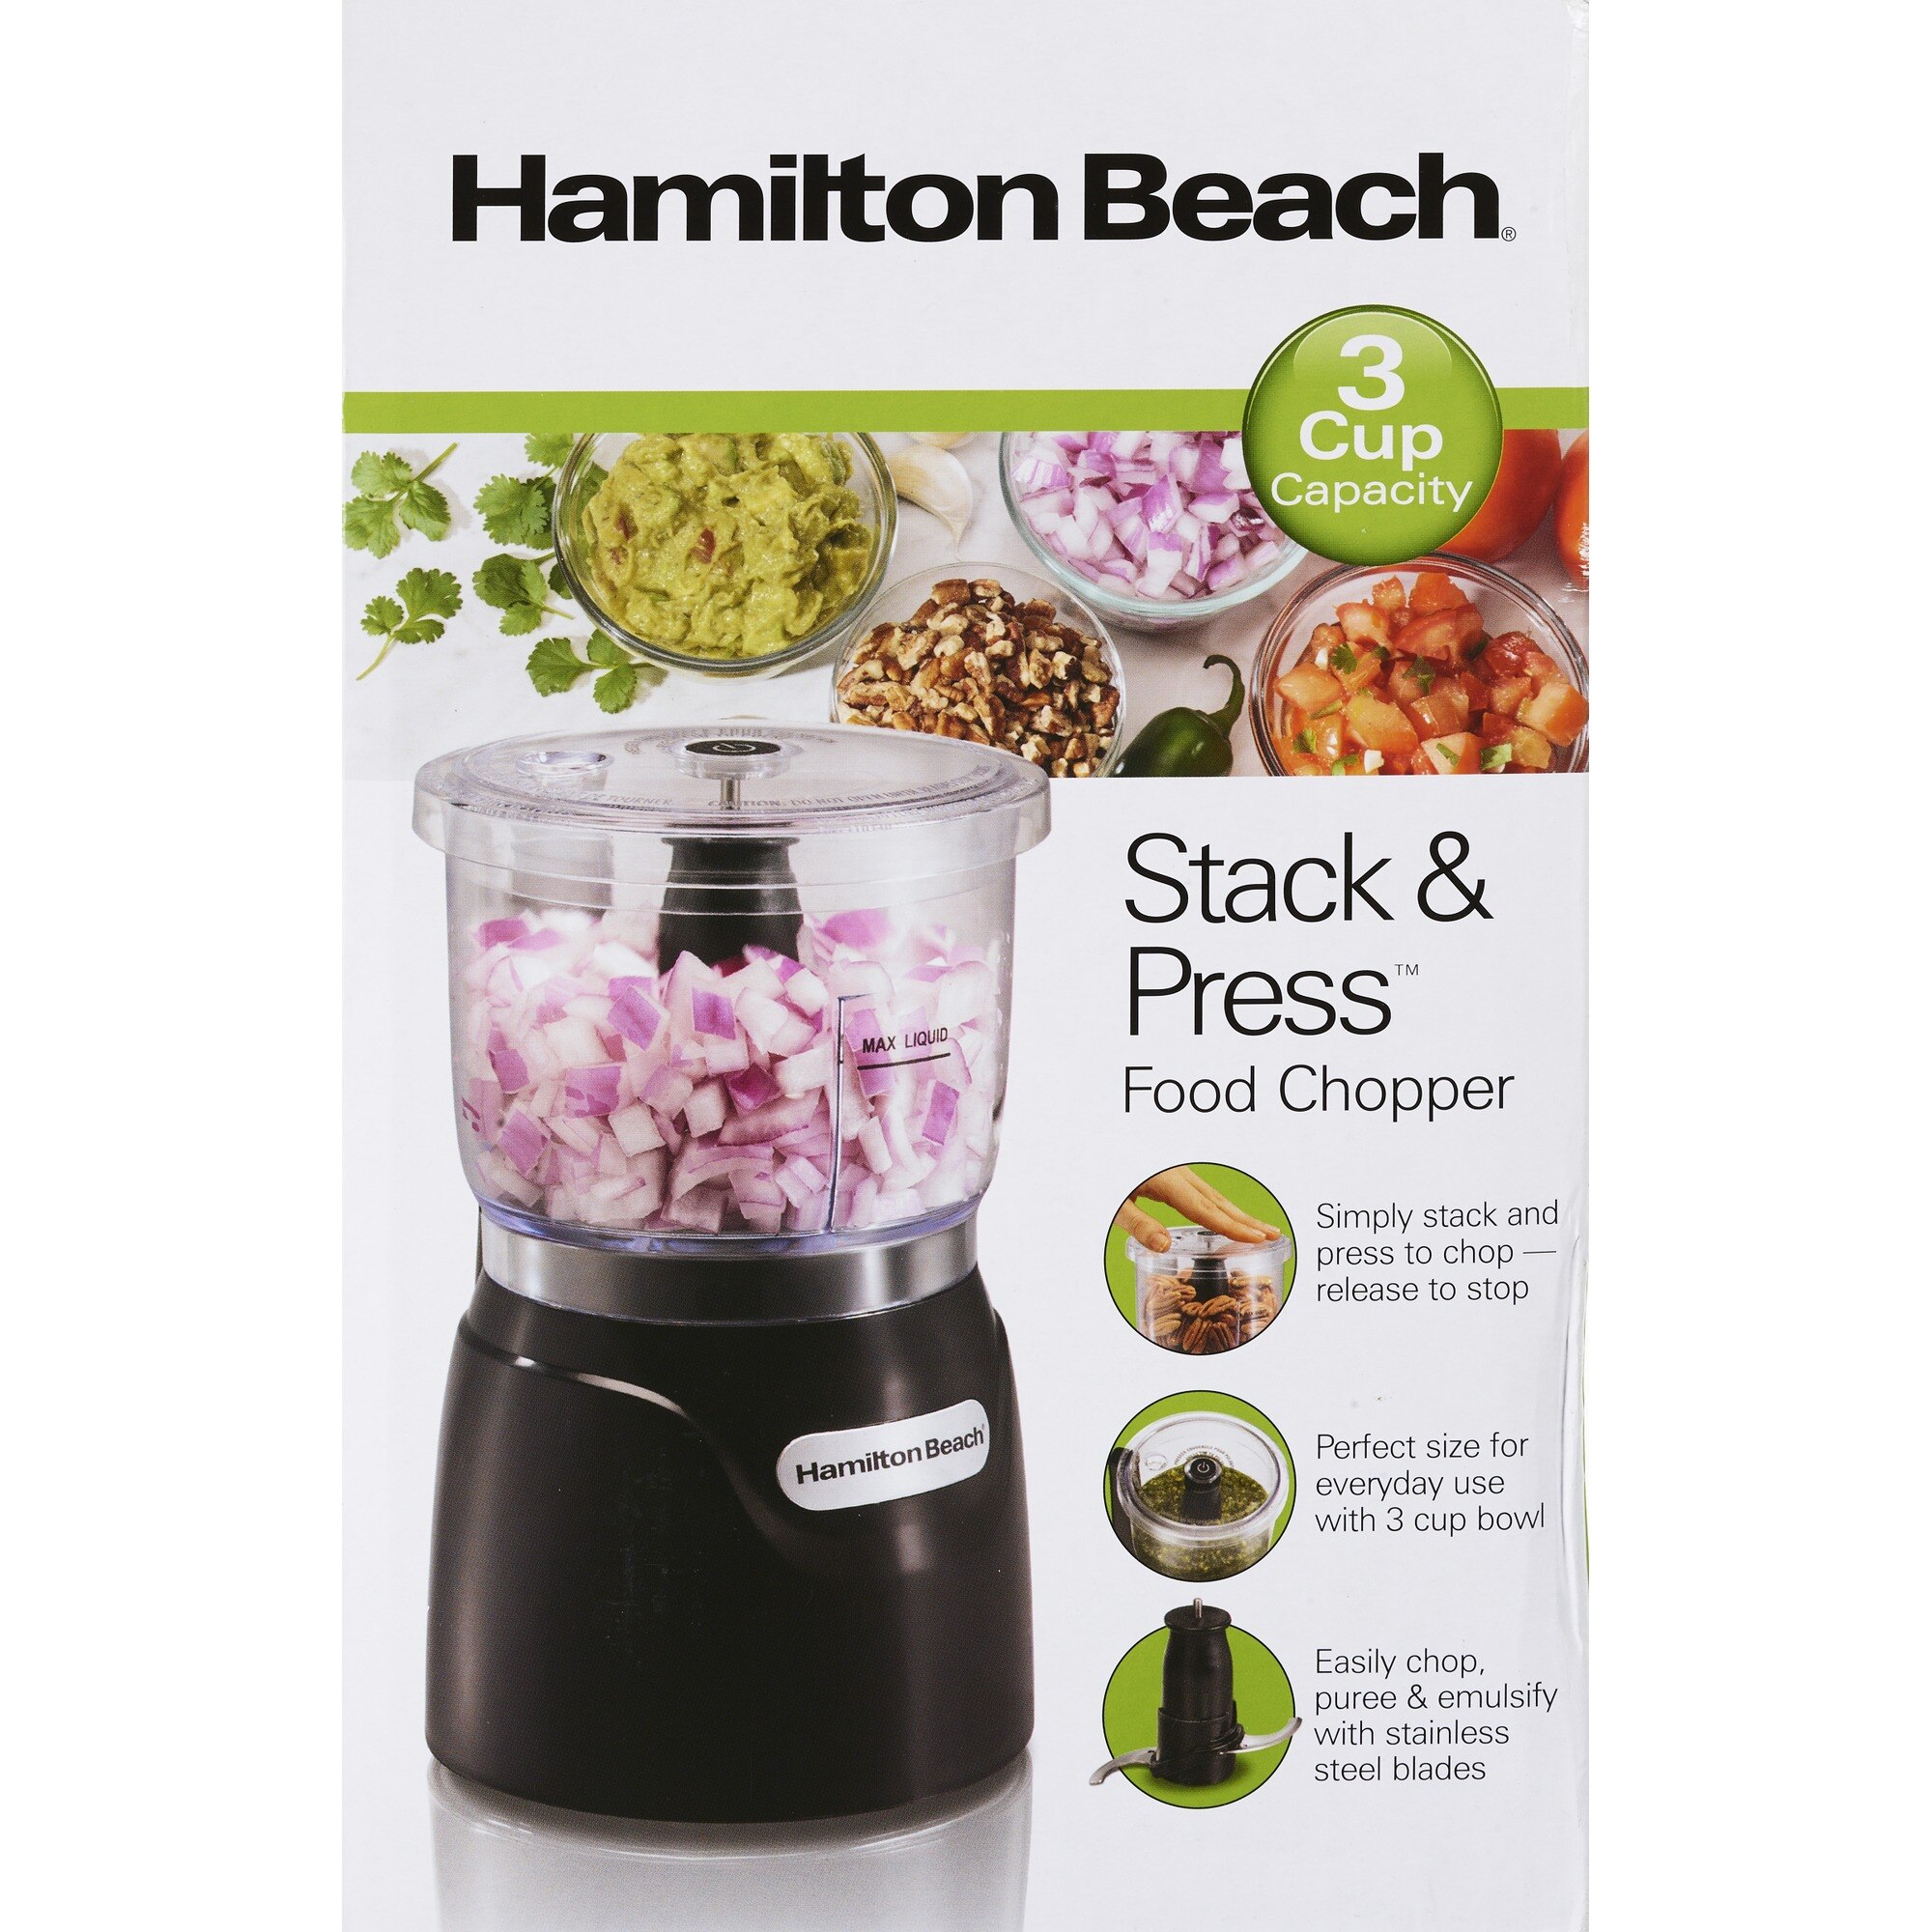 Customer Reviews: Hamilton Beach Stack & Press Food Chopper, 3 CUP